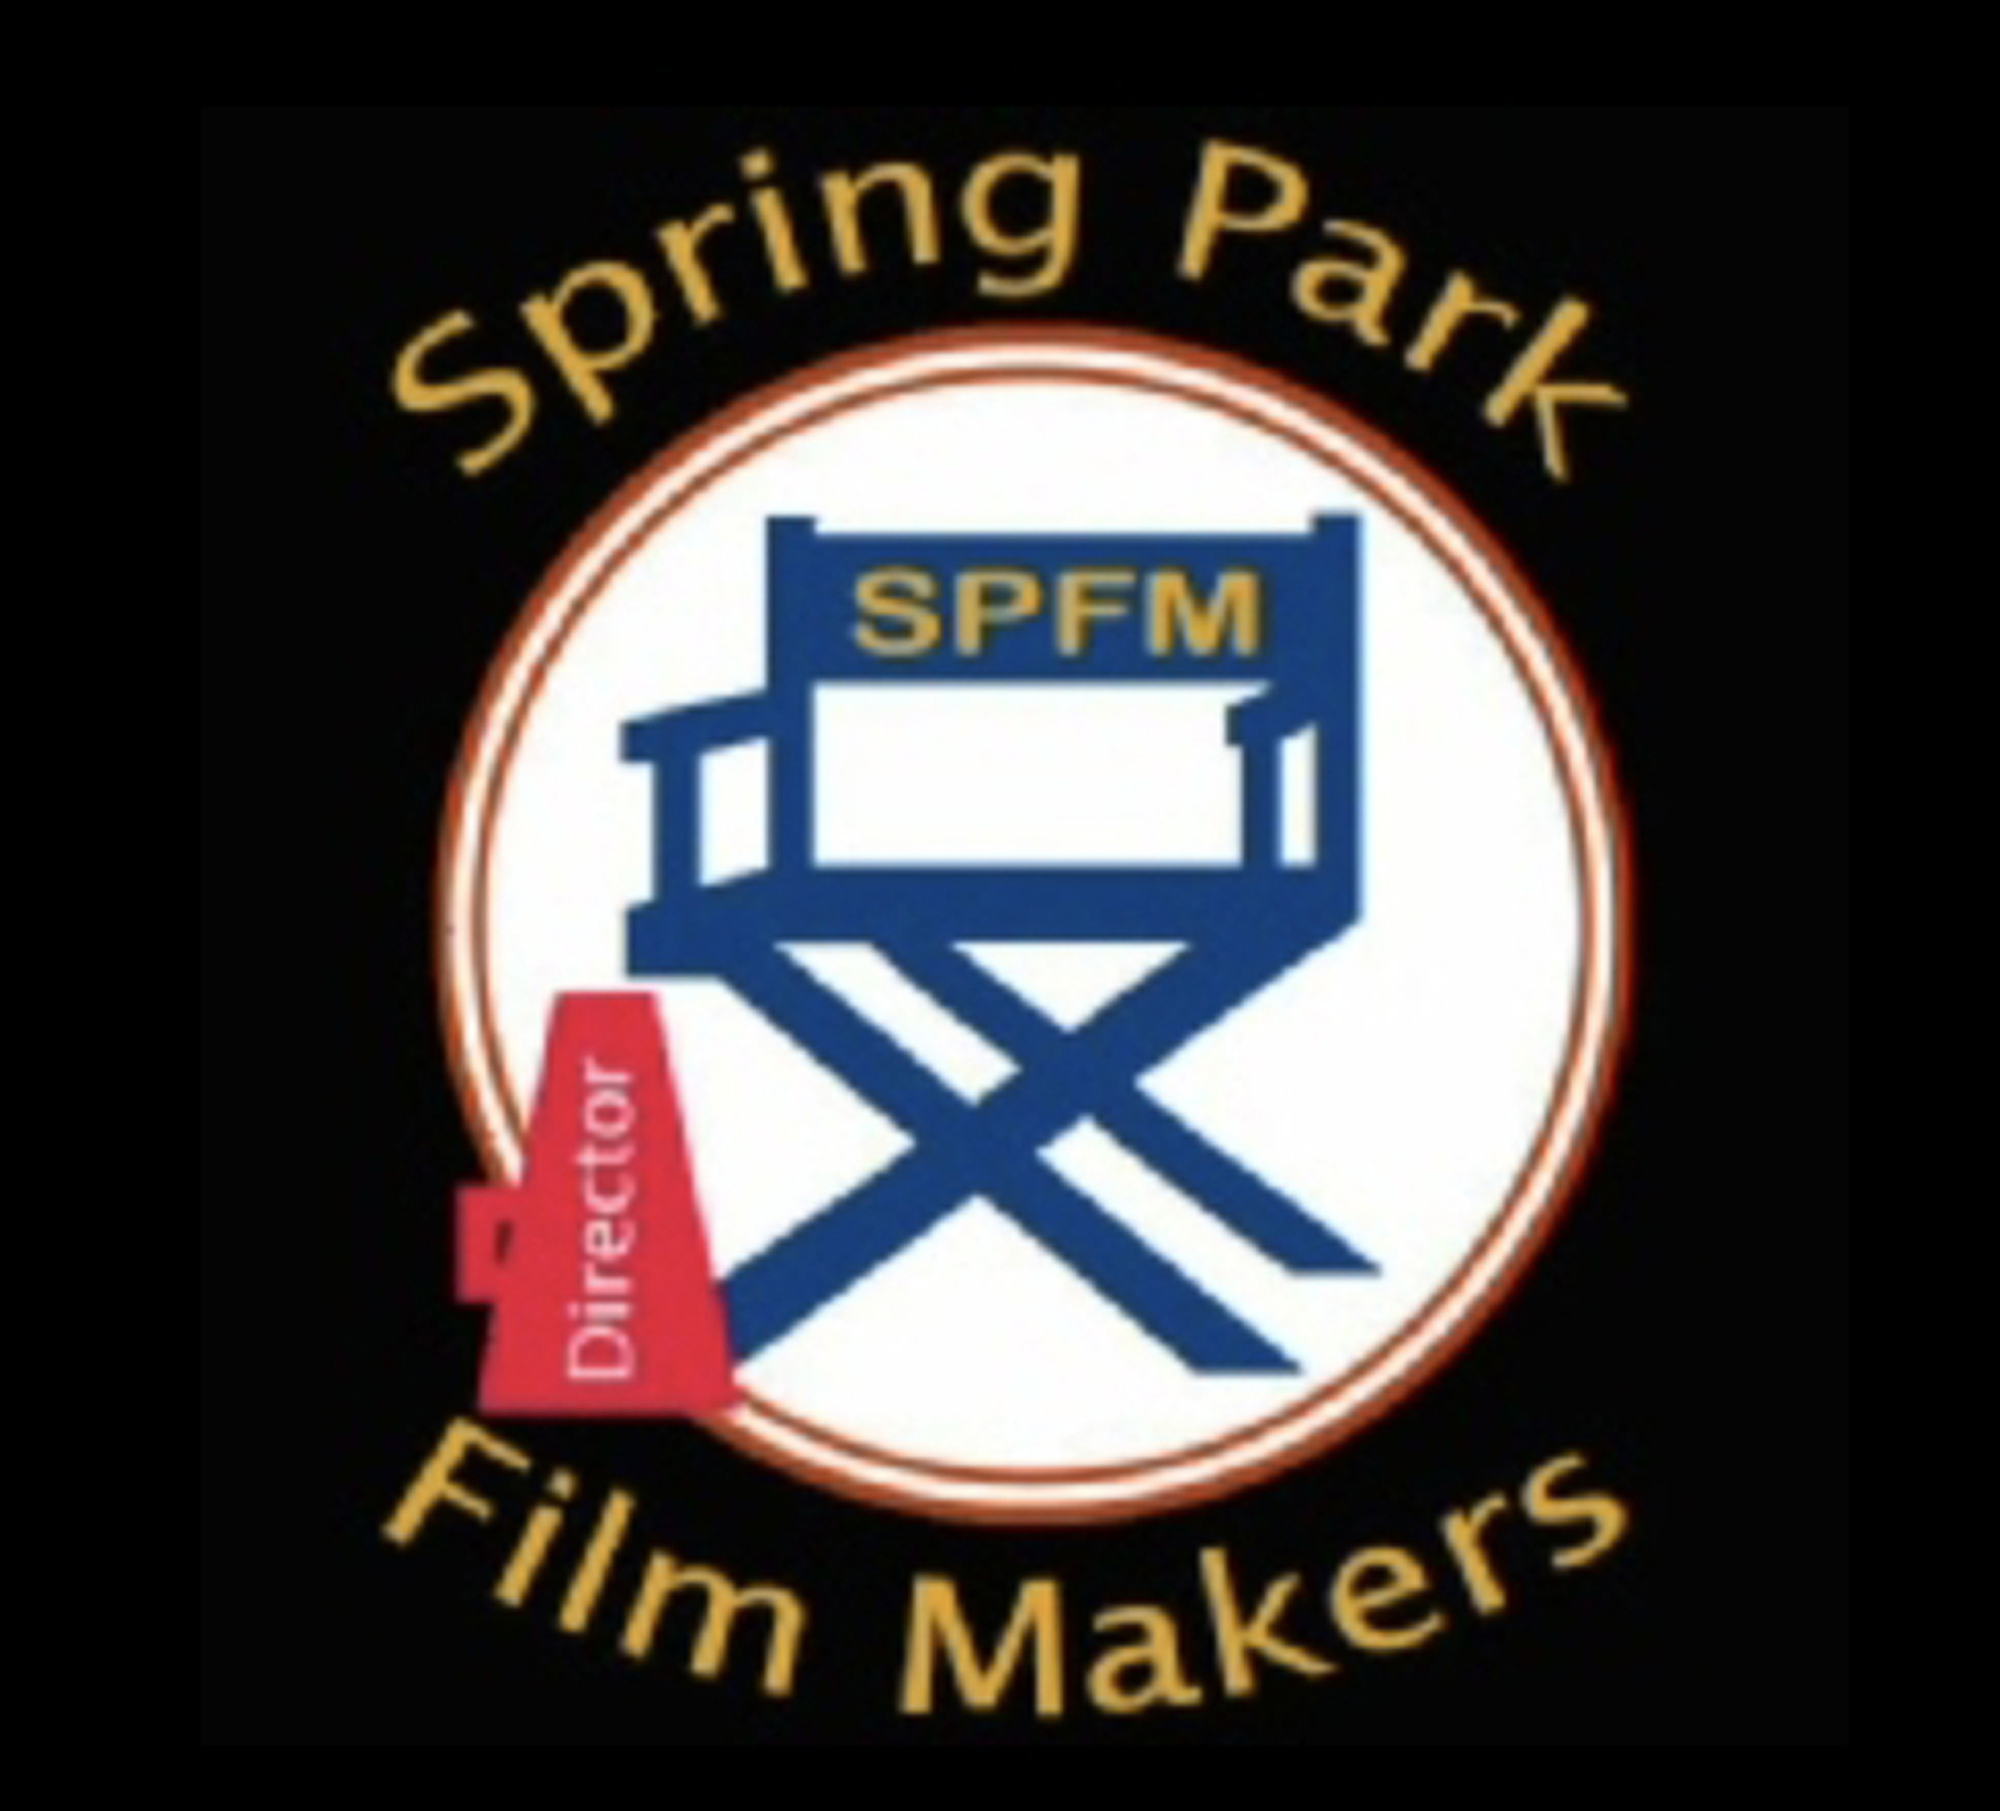 Spring Park Film Makers